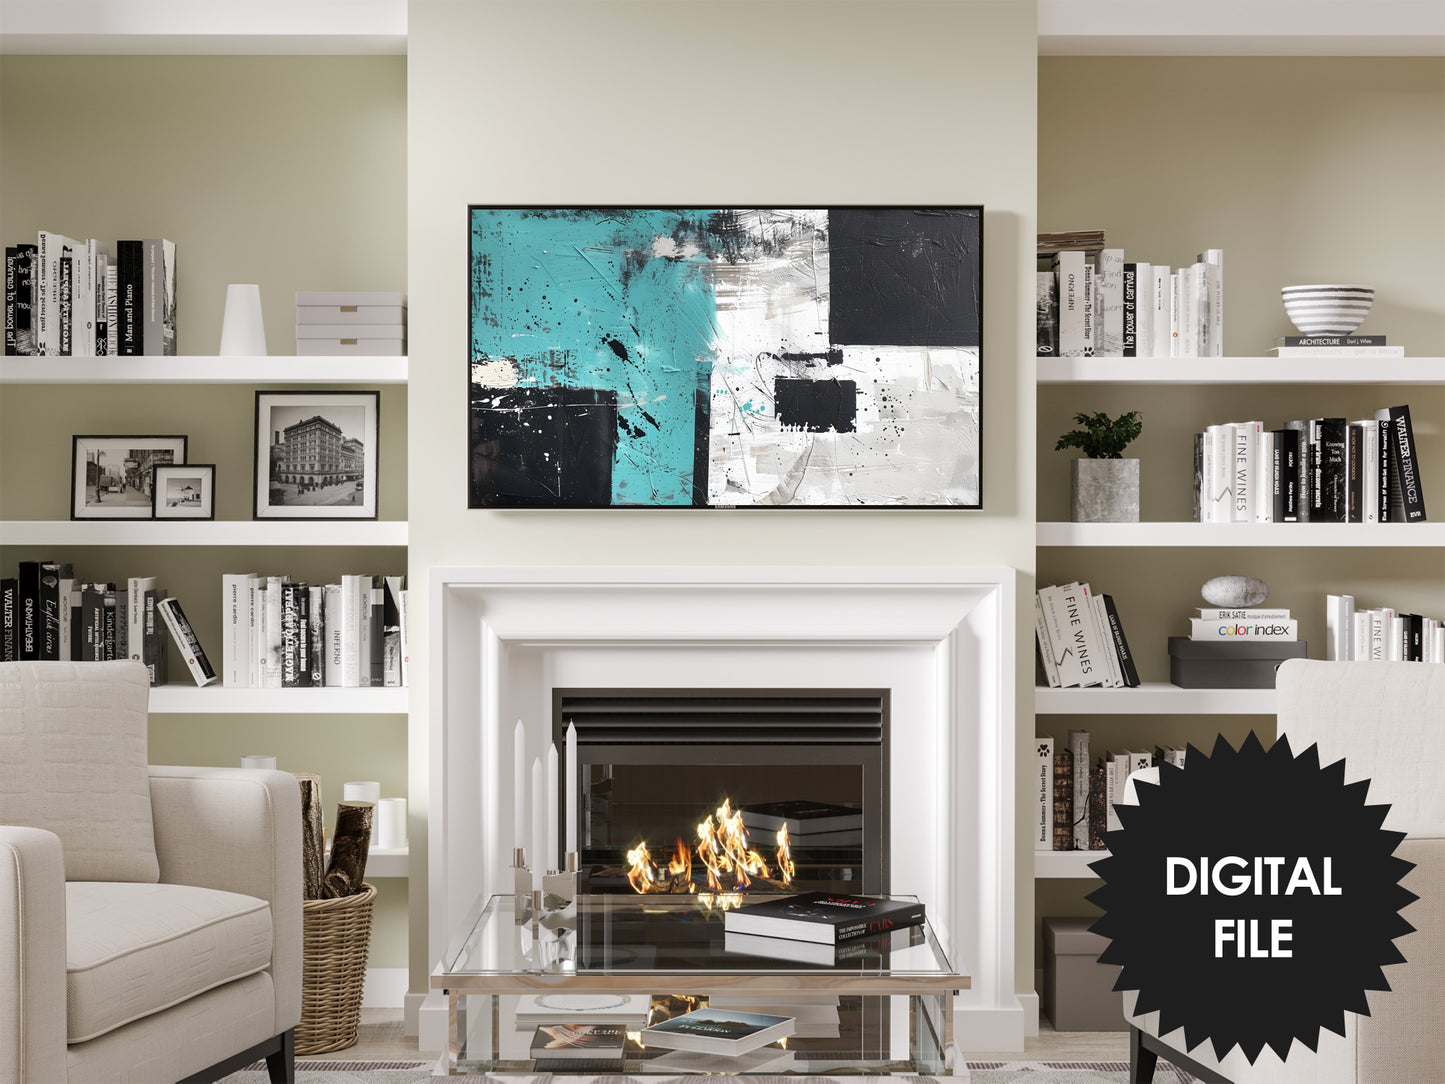 Vertical &amp; Horizontal Frame TV Art, Turquoise, Black, White Geometric Abstract Art. Horizontal art preview in modern black and white living room.